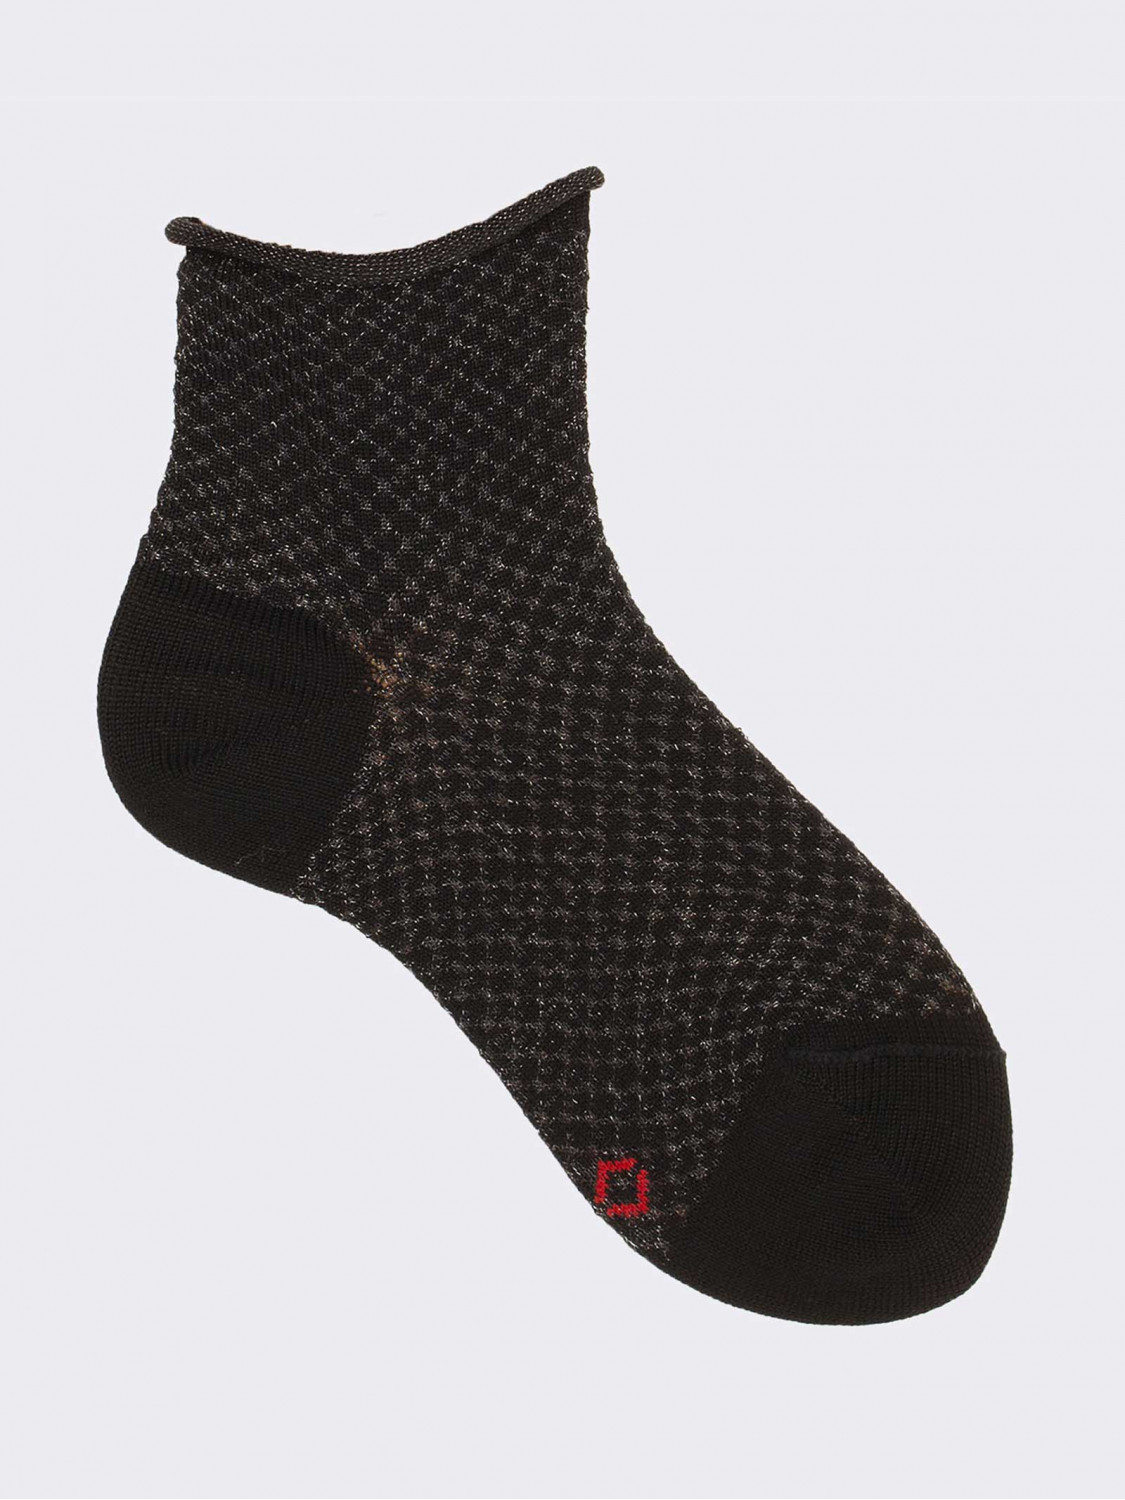 Net Pattern Girl's Short Socks in Cotton